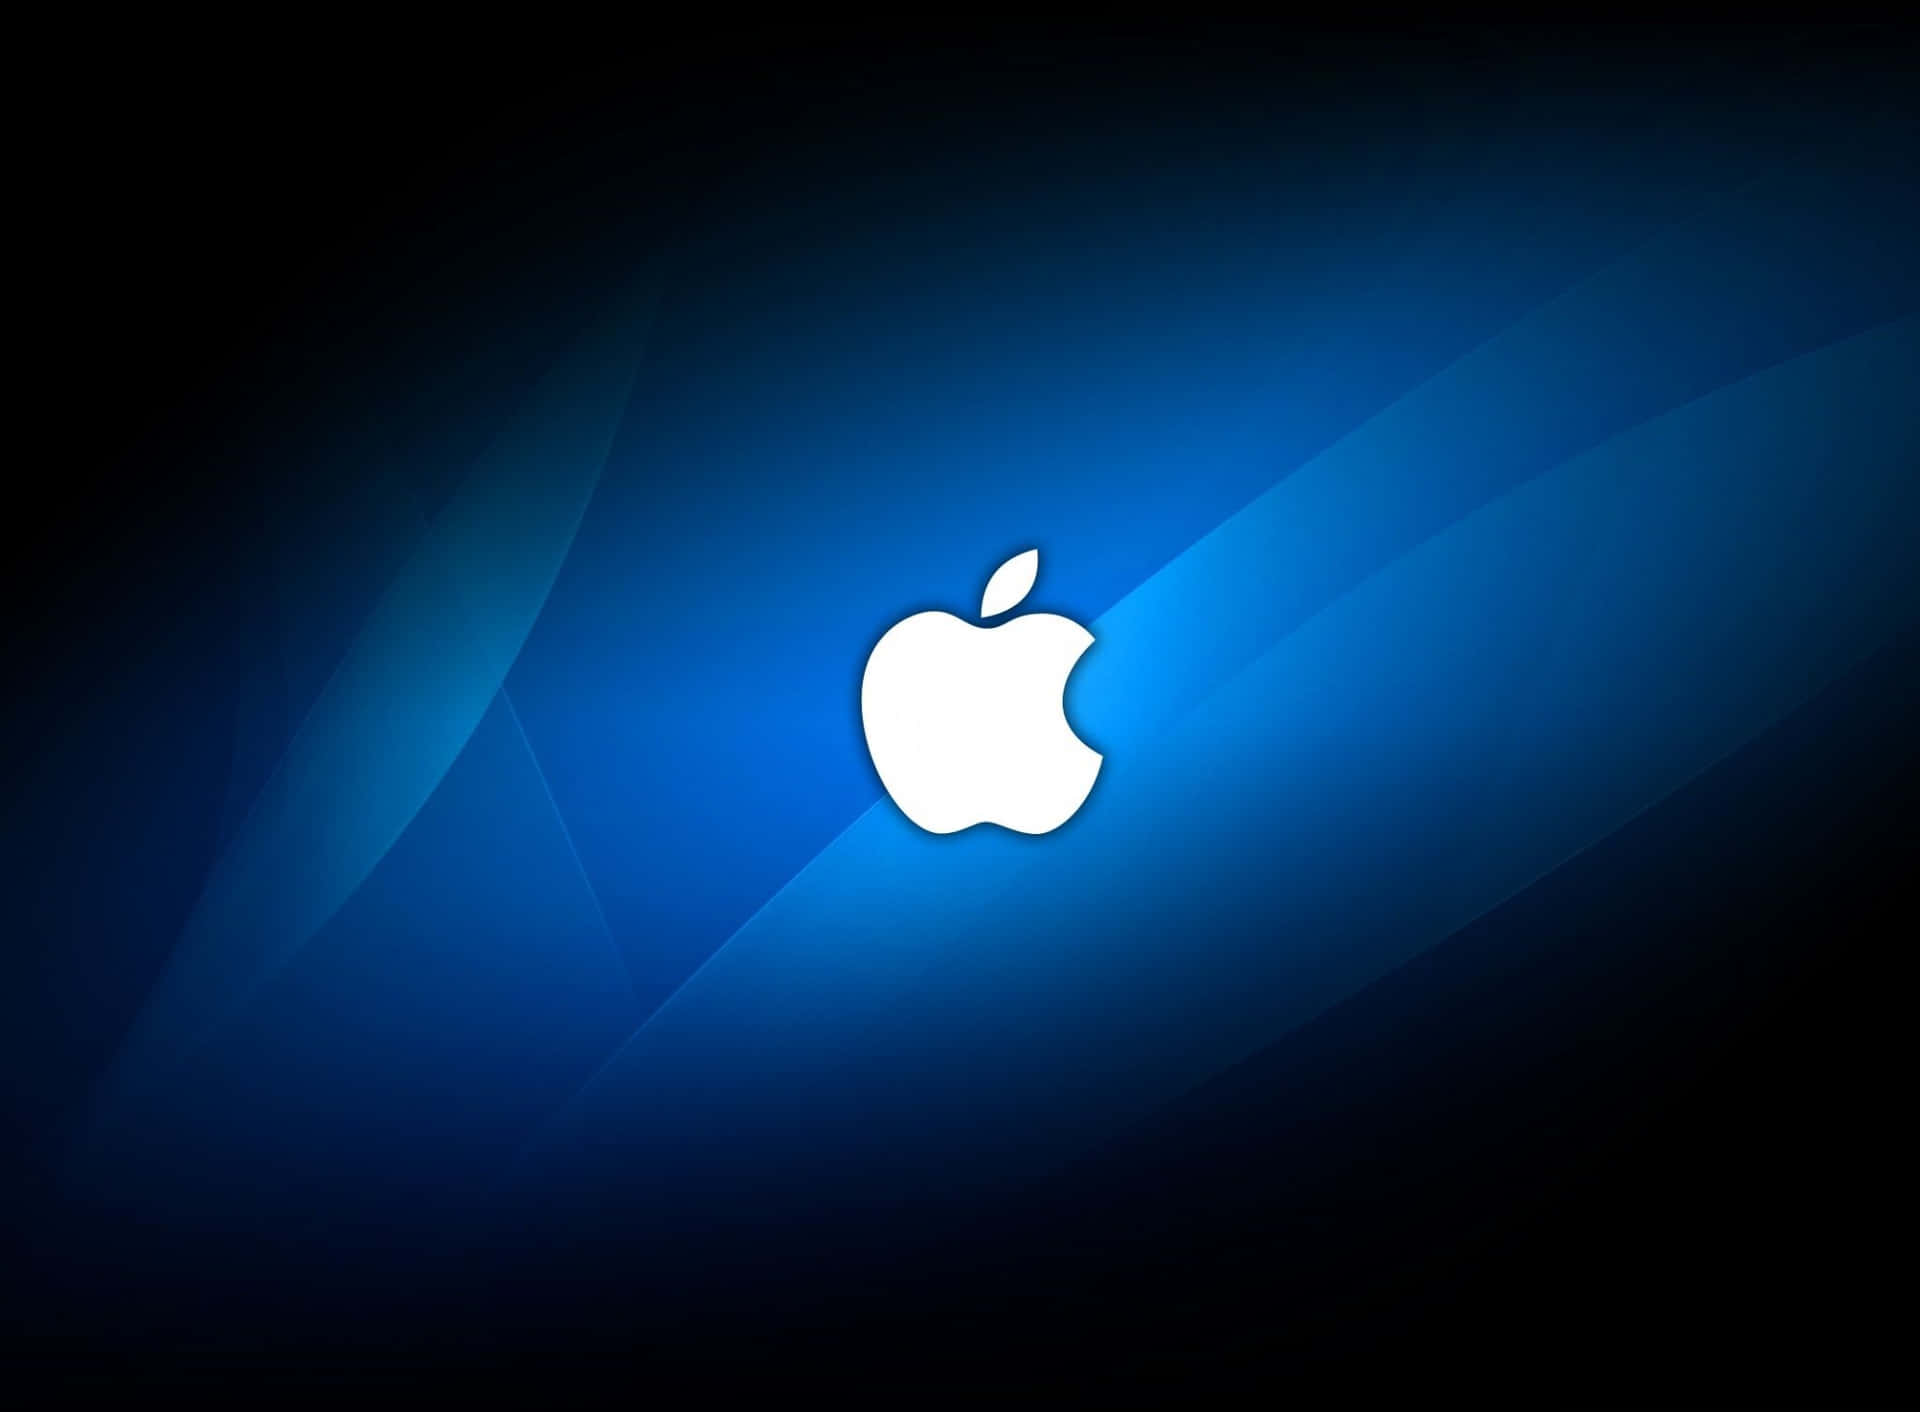 Blue Oval Light Cool Mac Logo Background